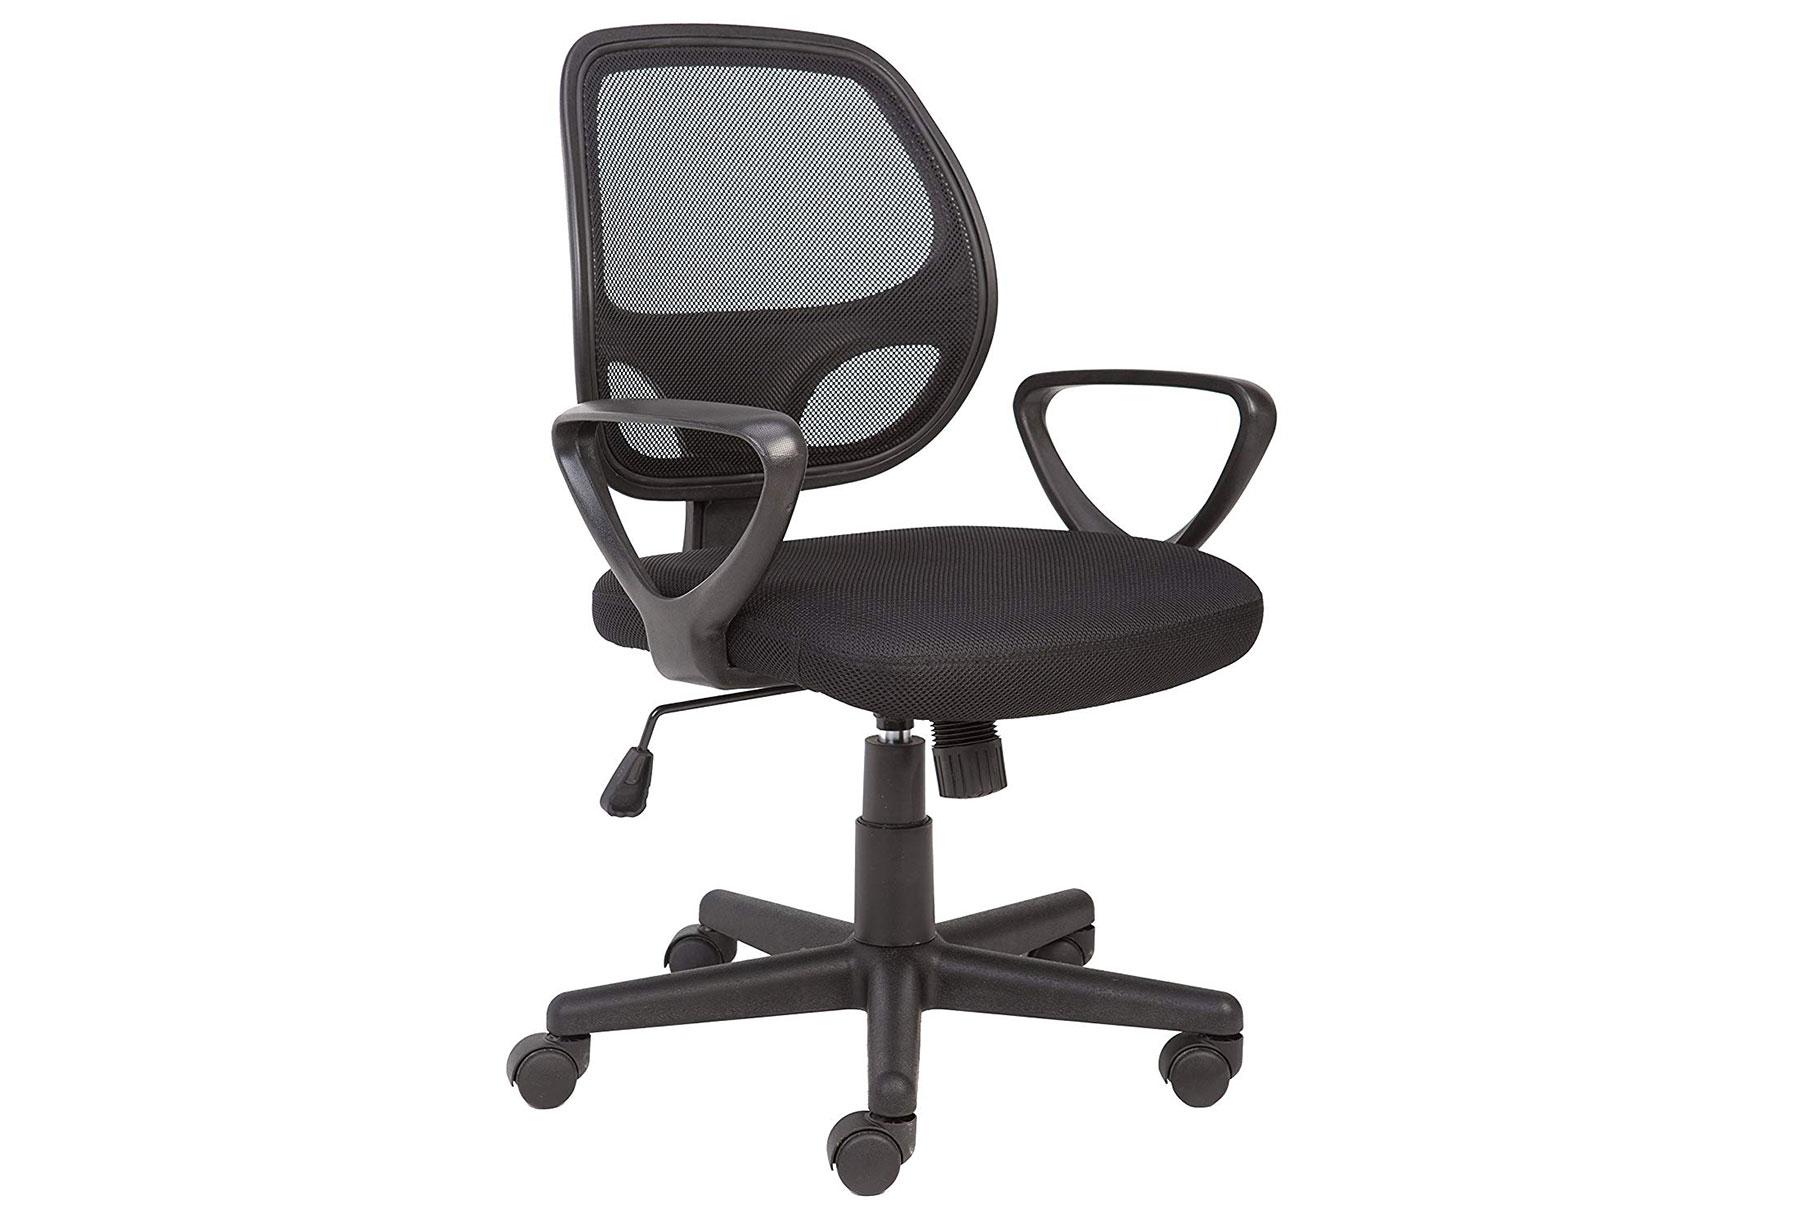 Best cheap office chair: Amazon Office Essentials Mesh Back Swivel Desk Chair